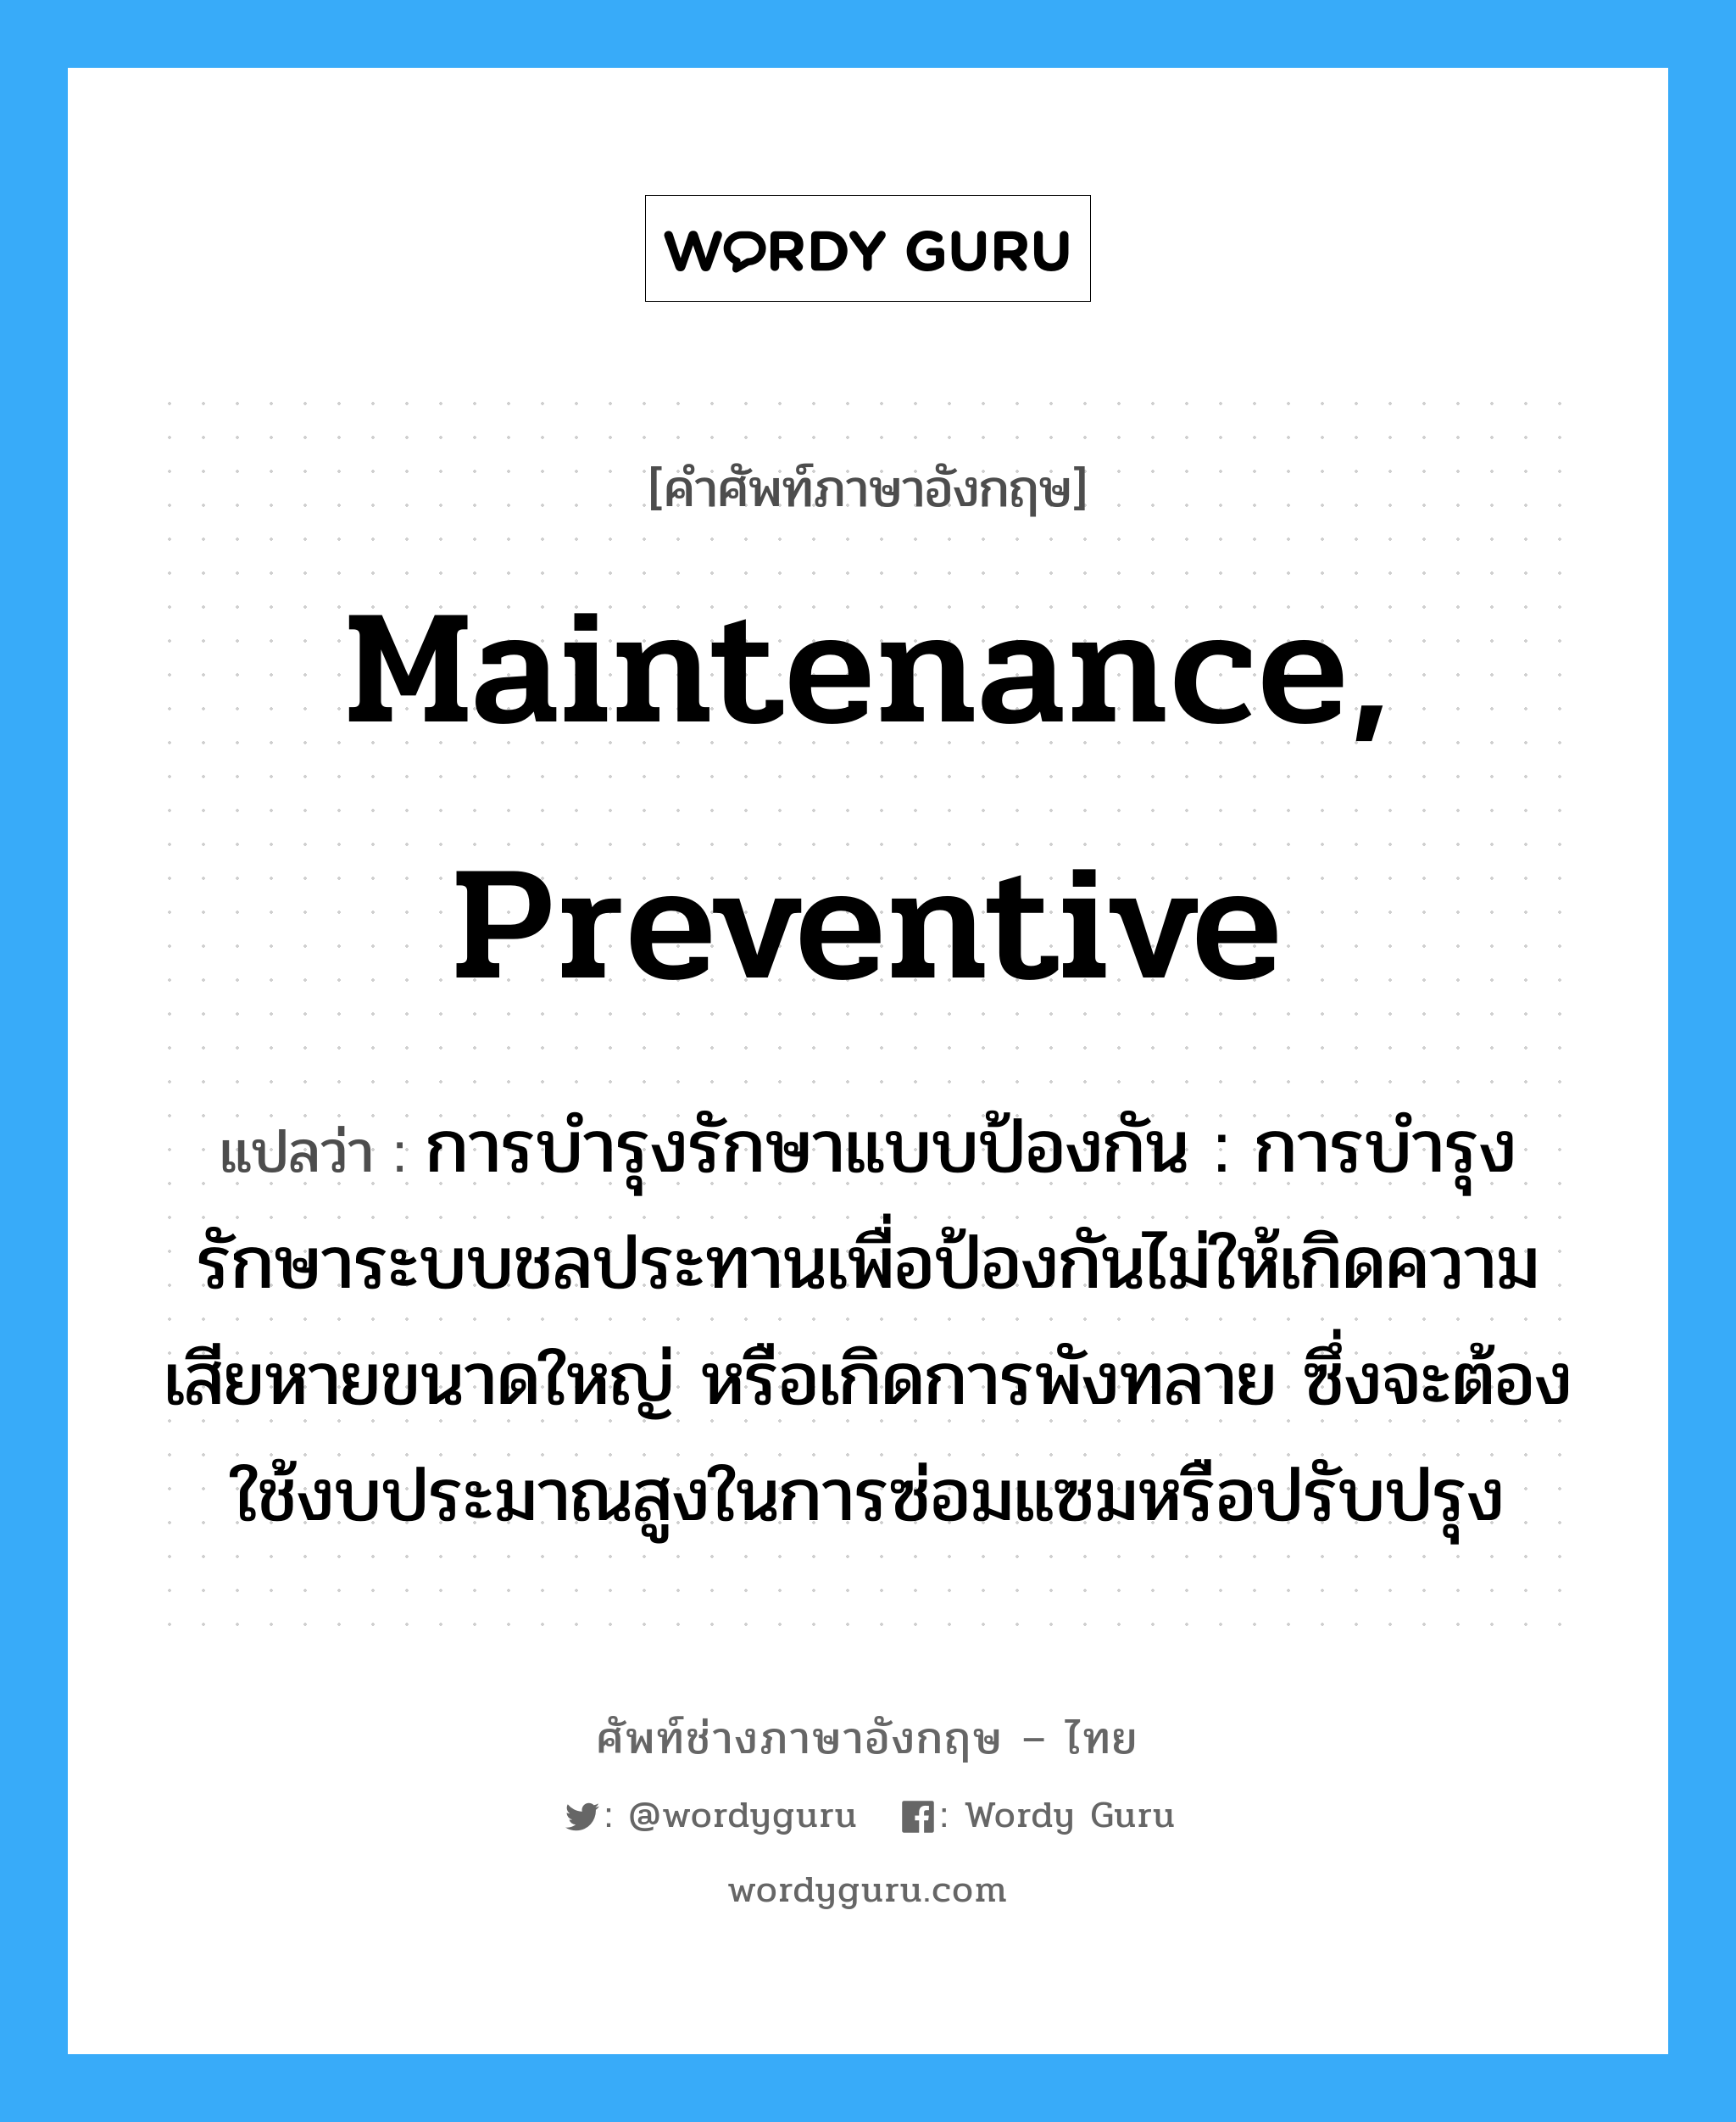 maintenance, preventive แปลว่า?, คำศัพท์ช่างภาษาอังกฤษ - ไทย maintenance, preventive คำศัพท์ภาษาอังกฤษ maintenance, preventive แปลว่า การบำรุงรักษาแบบป้องกัน : การบำรุงรักษาระบบชลประทานเพื่อป้องกันไม่ให้เกิดความเสียหายขนาดใหญ่ หรือเกิดการพังทลาย ซึ่งจะต้องใช้งบประมาณสูงในการซ่อมแซมหรือปรับปรุง